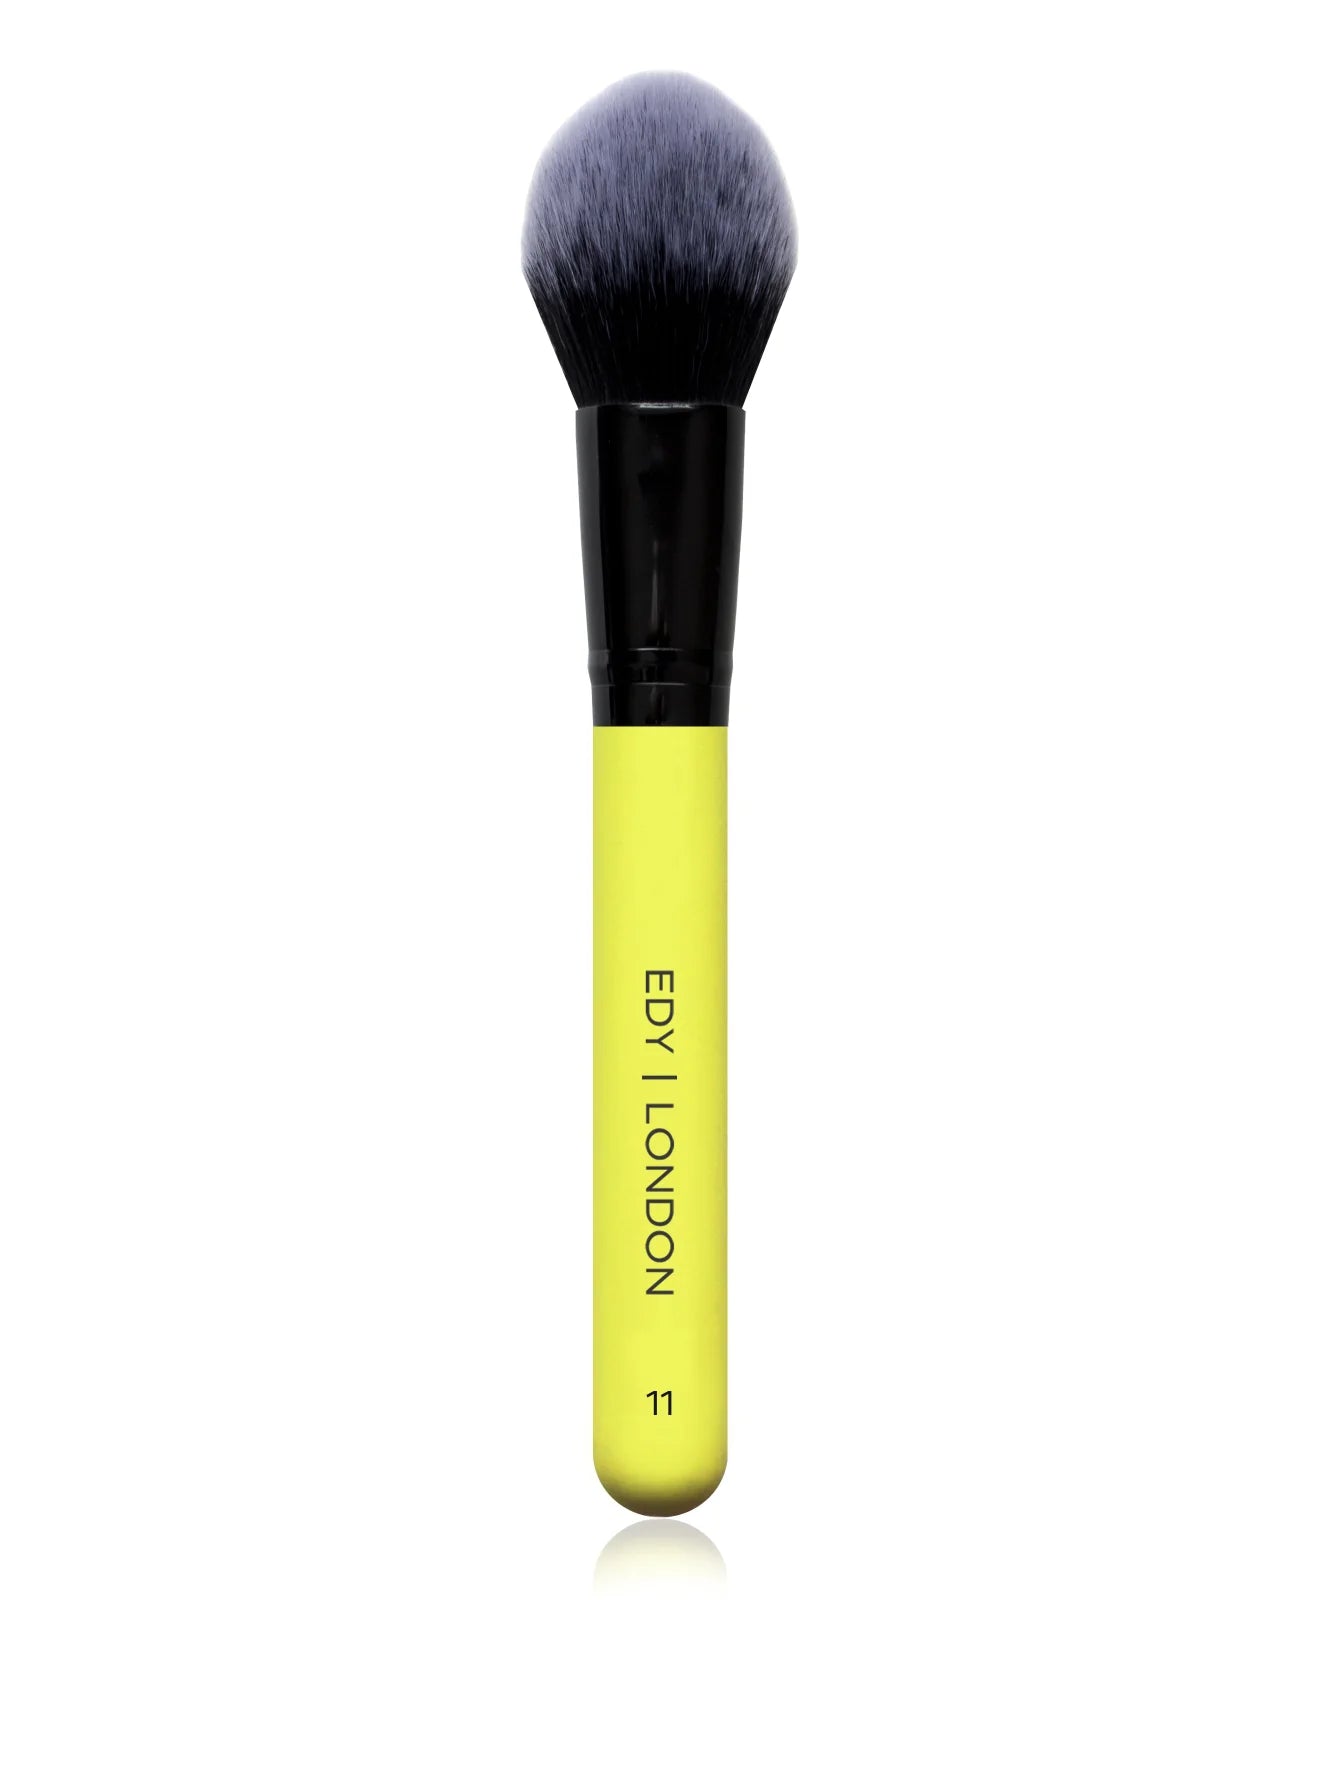 Tulip face brush 11 Make-up Brush EDY LONDON Lemon   - EDY LONDON PRODUCTS UK - The Best Makeup Brushes - shop.edy.london